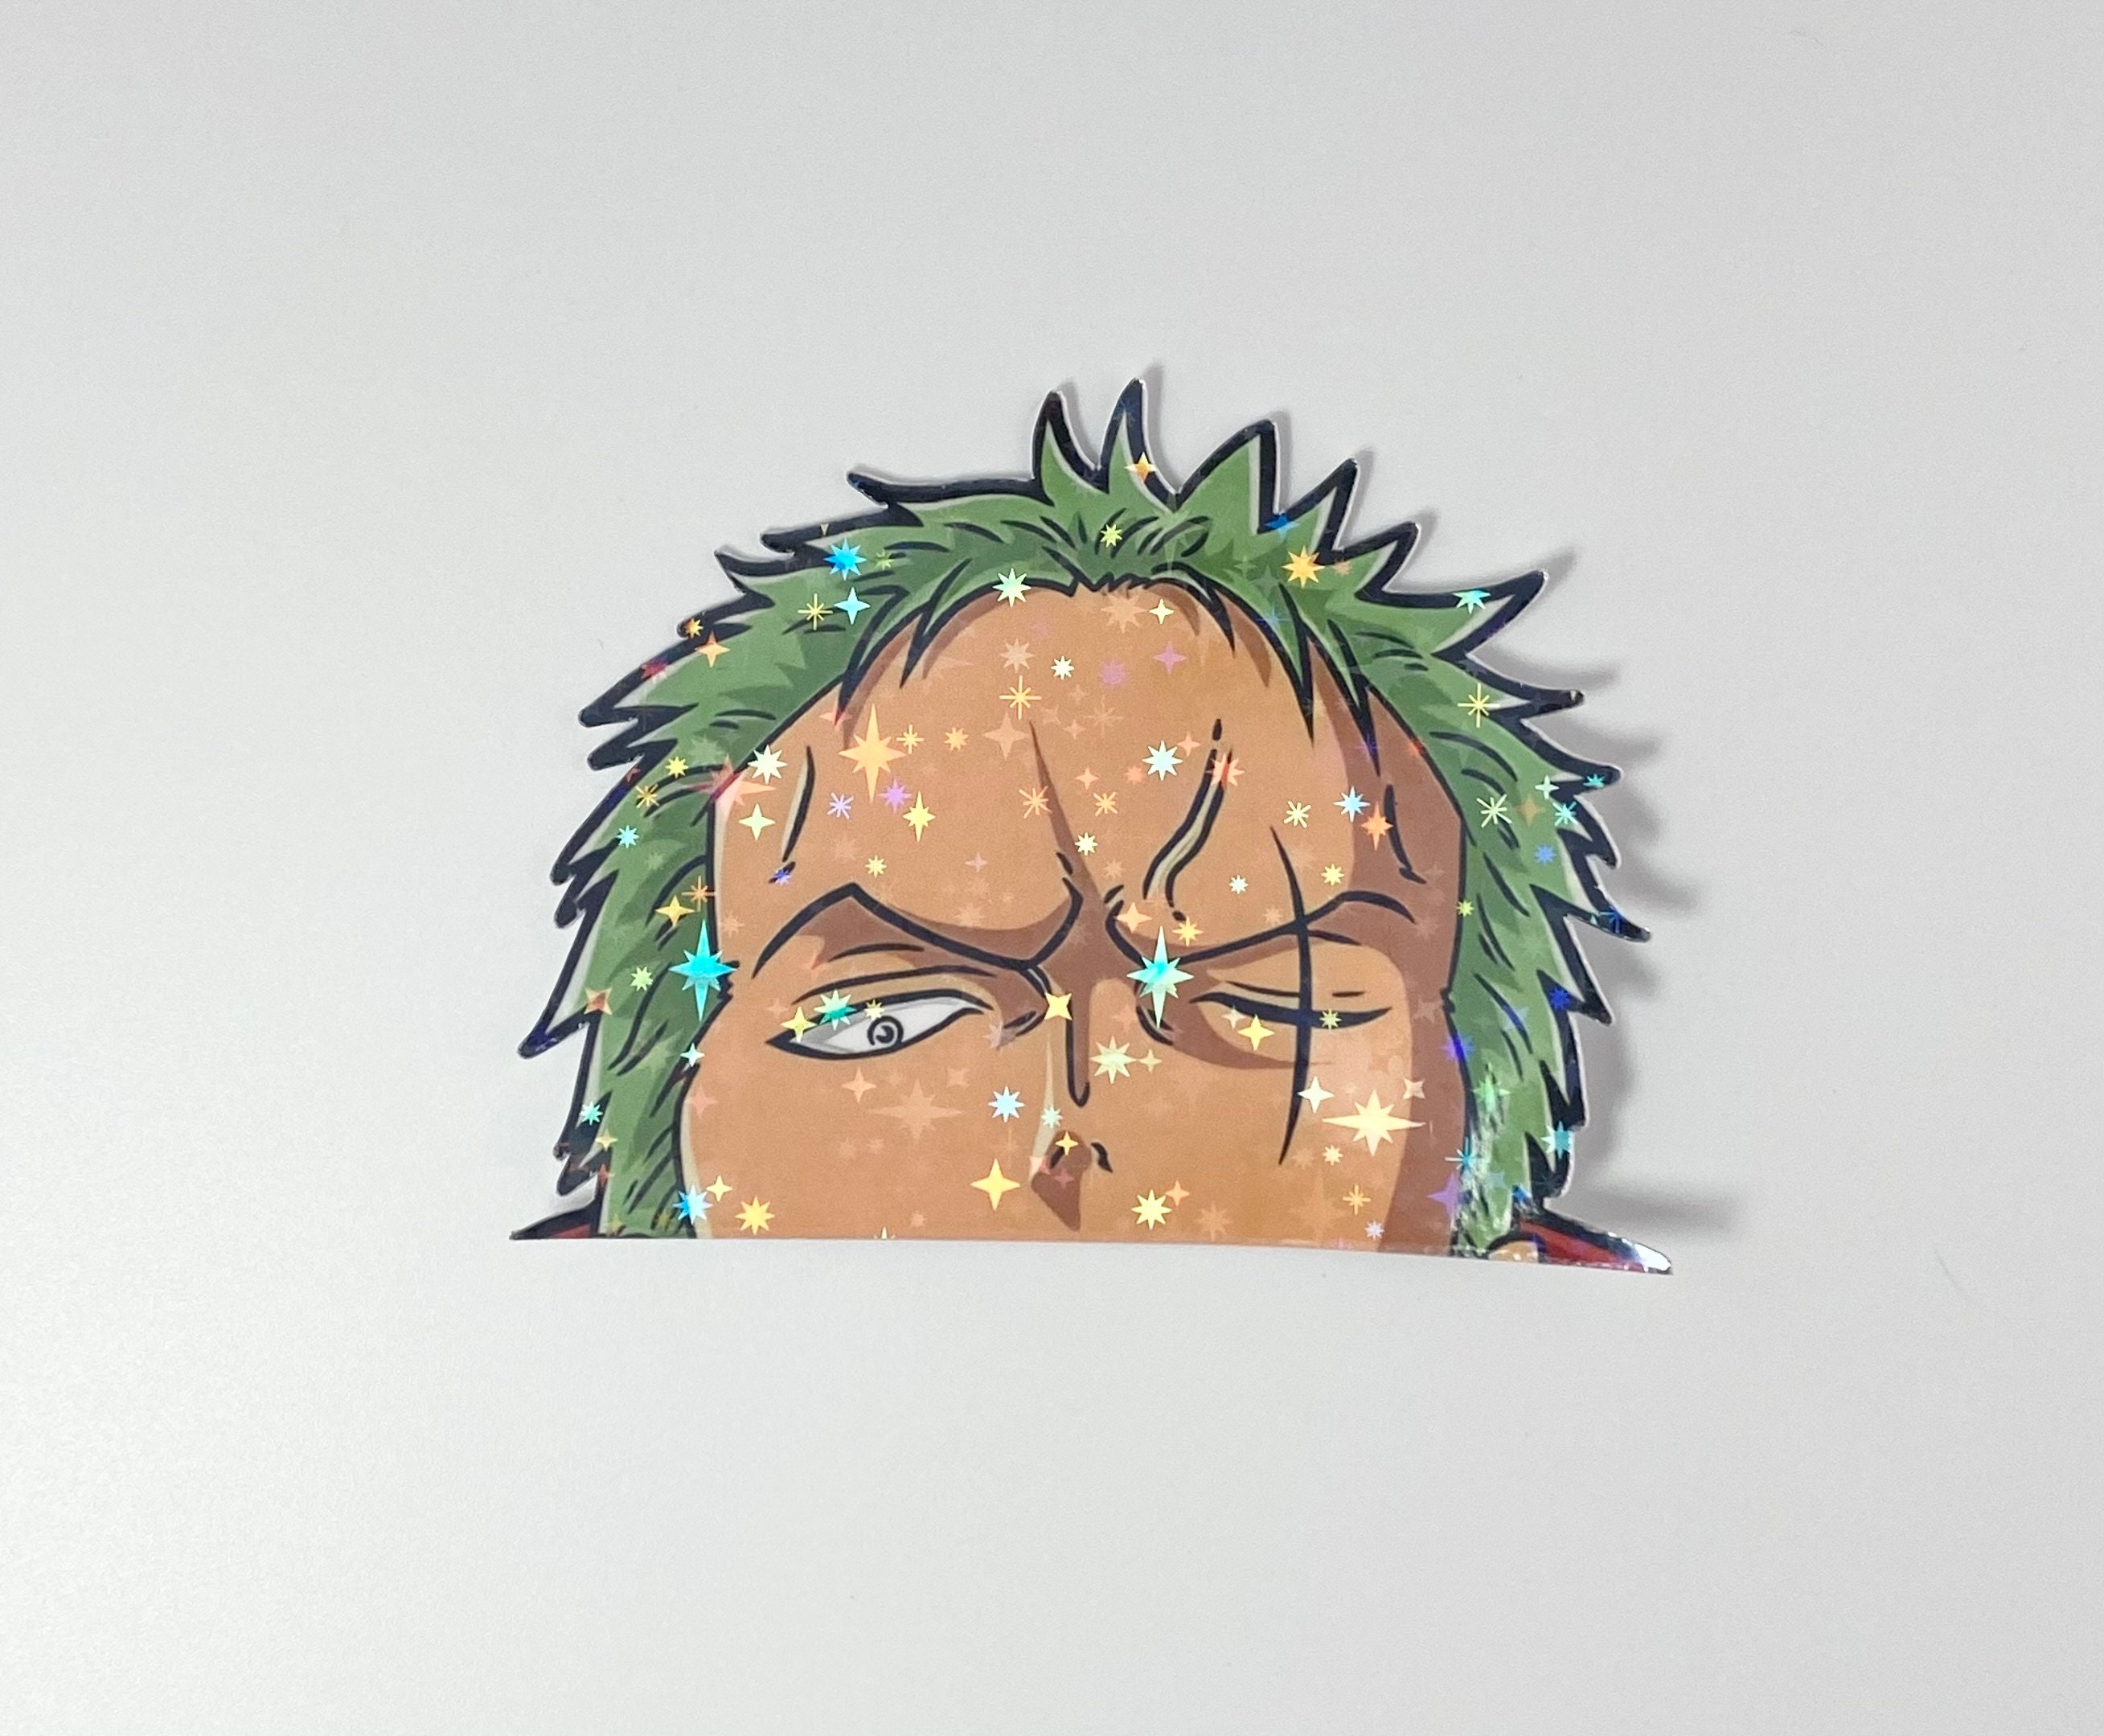 One Piece Roronoa Zoro  Sticker for Sale by DaturaSnake